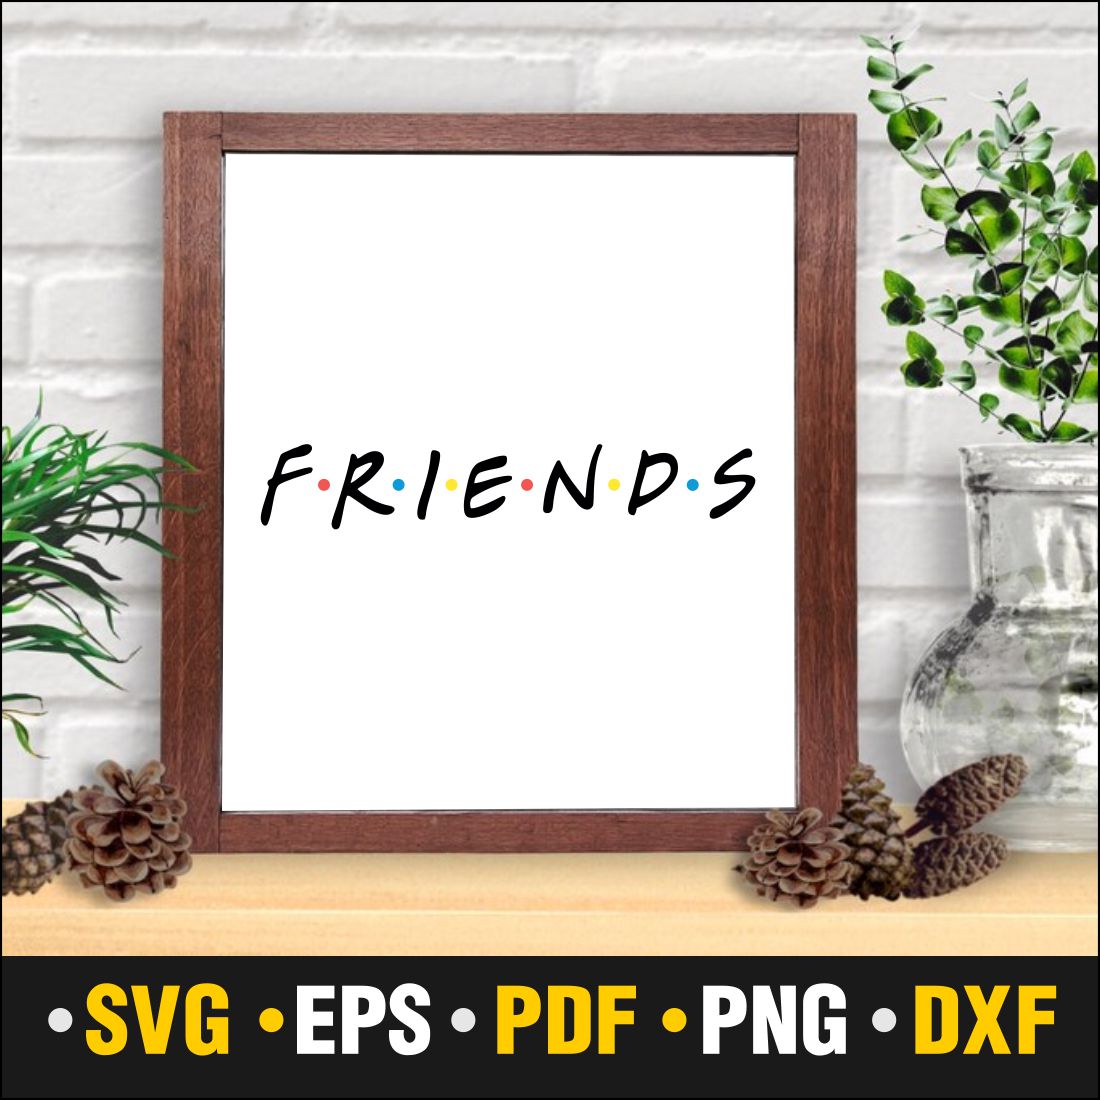 Friends Svg, Friends Frame Svg Vector Cut file Cricut, Silhouette, Pdf Png, Dxf, Decal, Sticker, Stencil, Vinyl preview image.